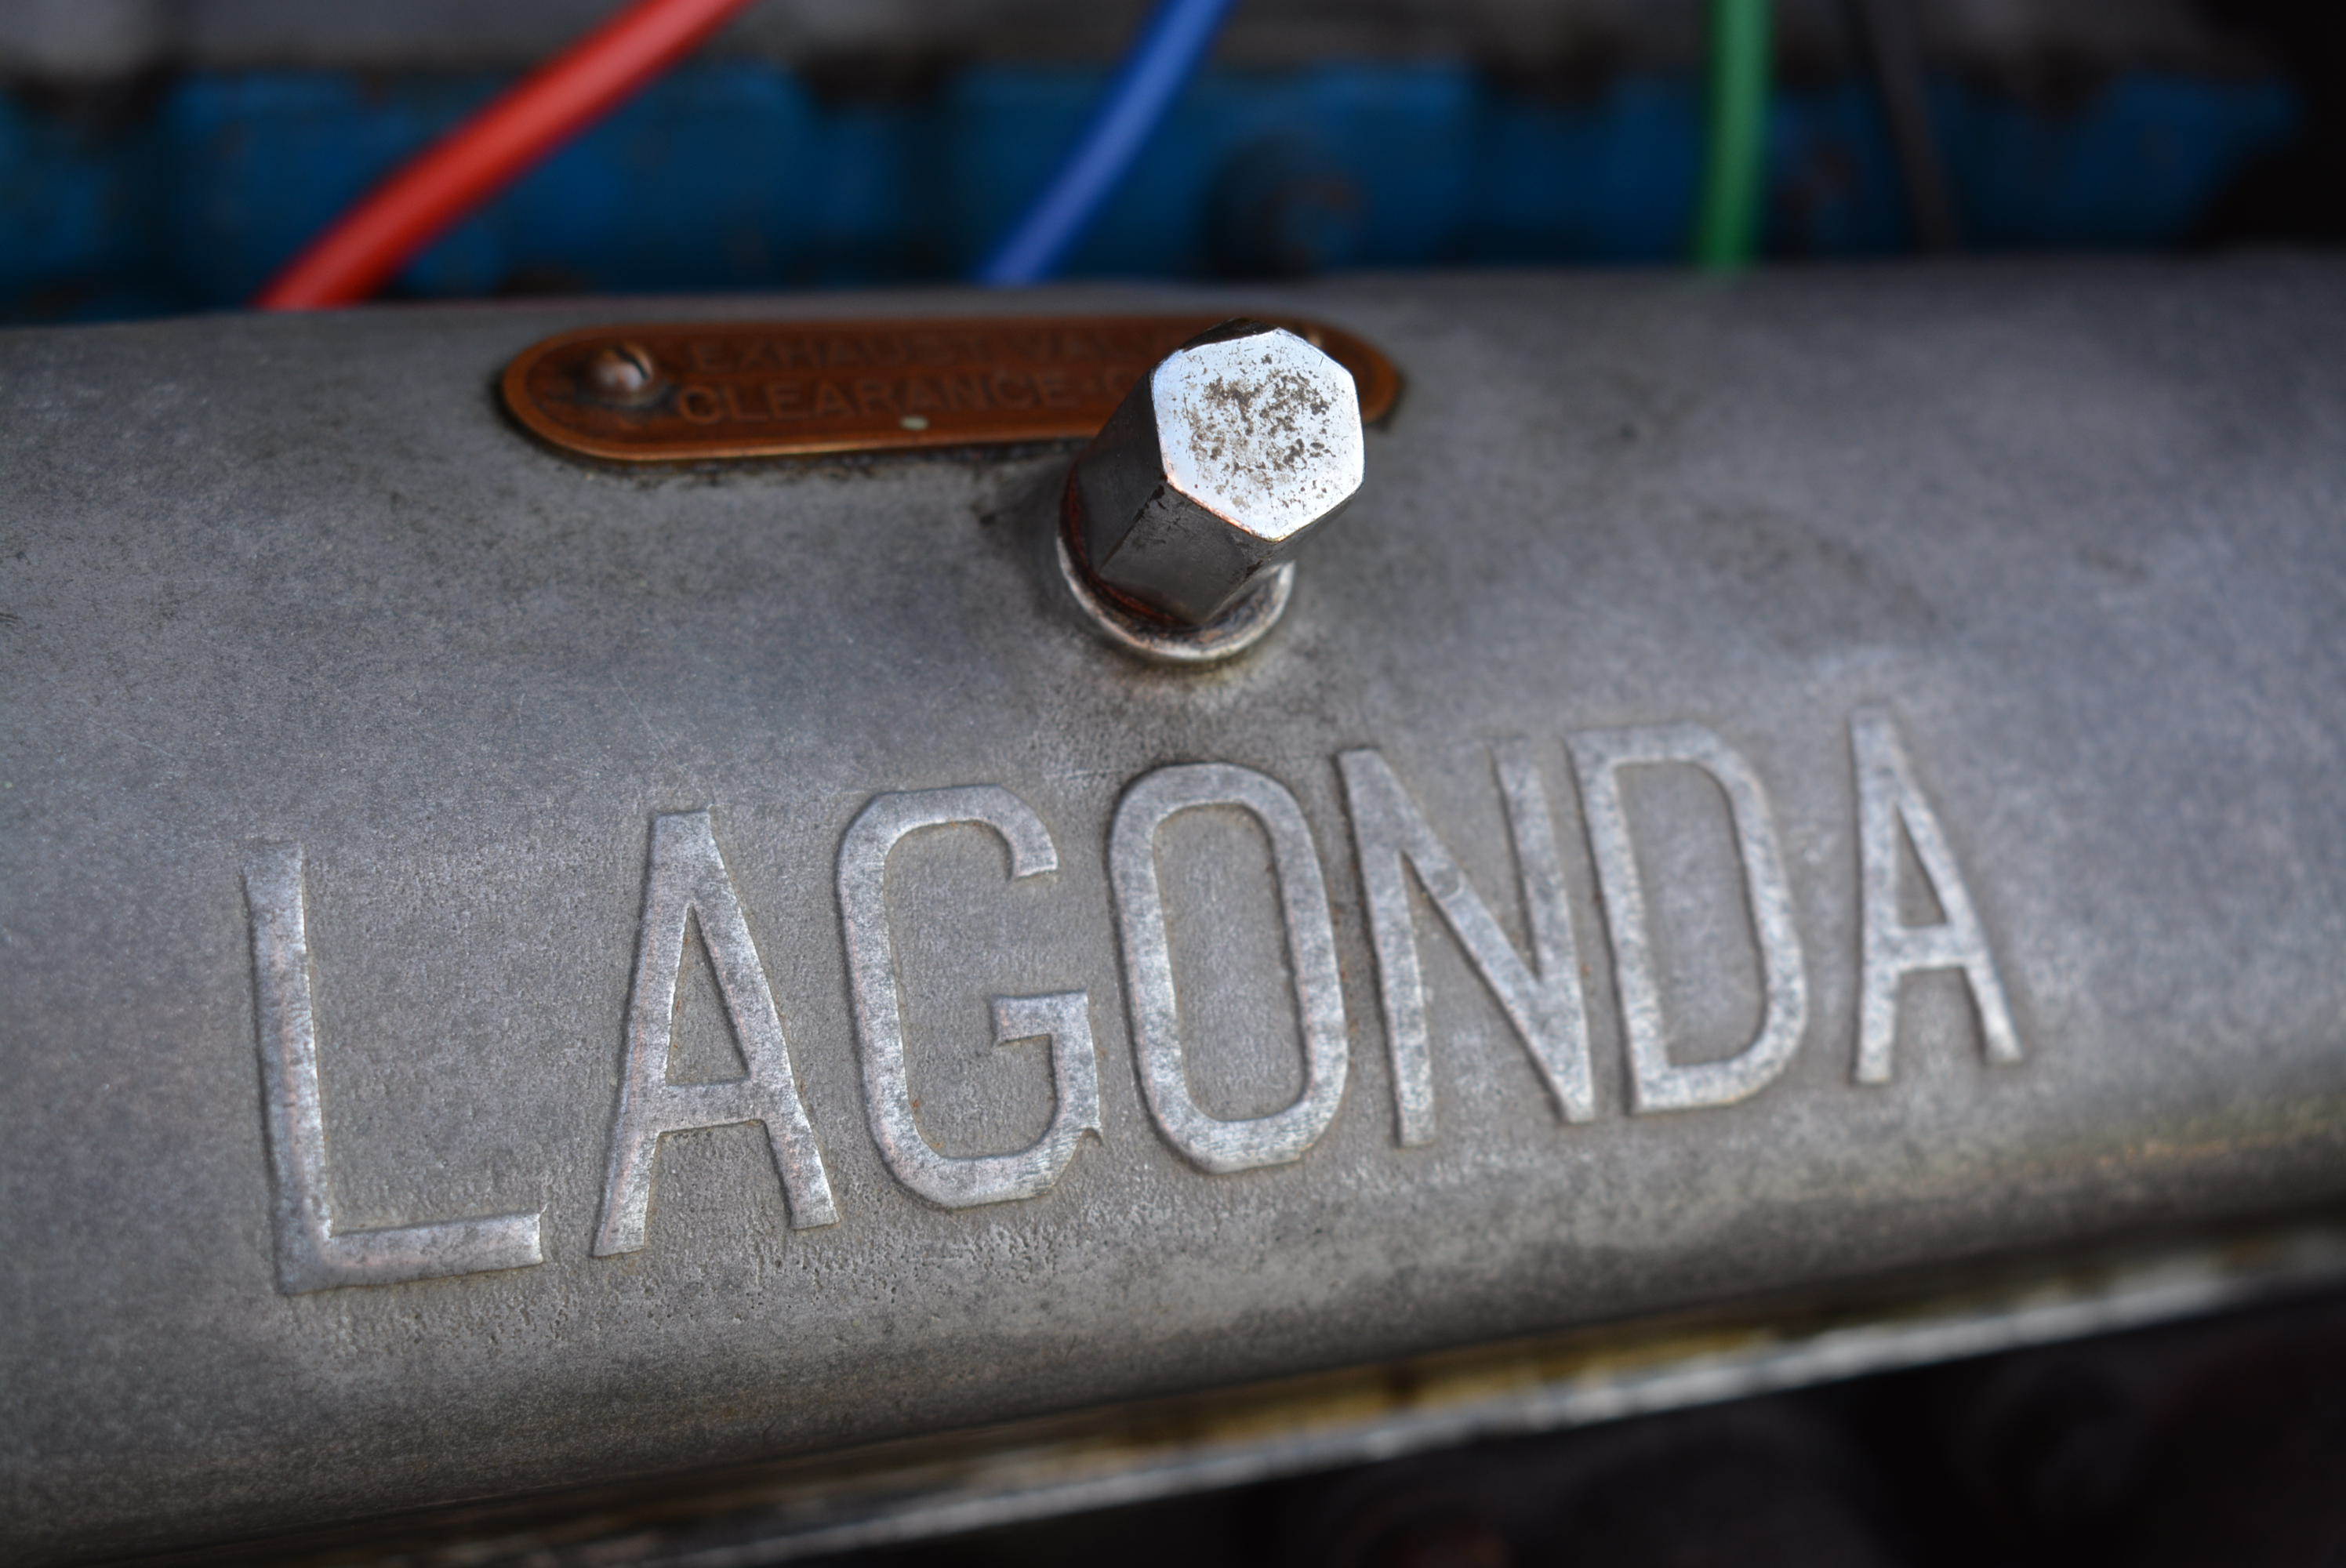 Lagonda Rapier Abbott Coupe